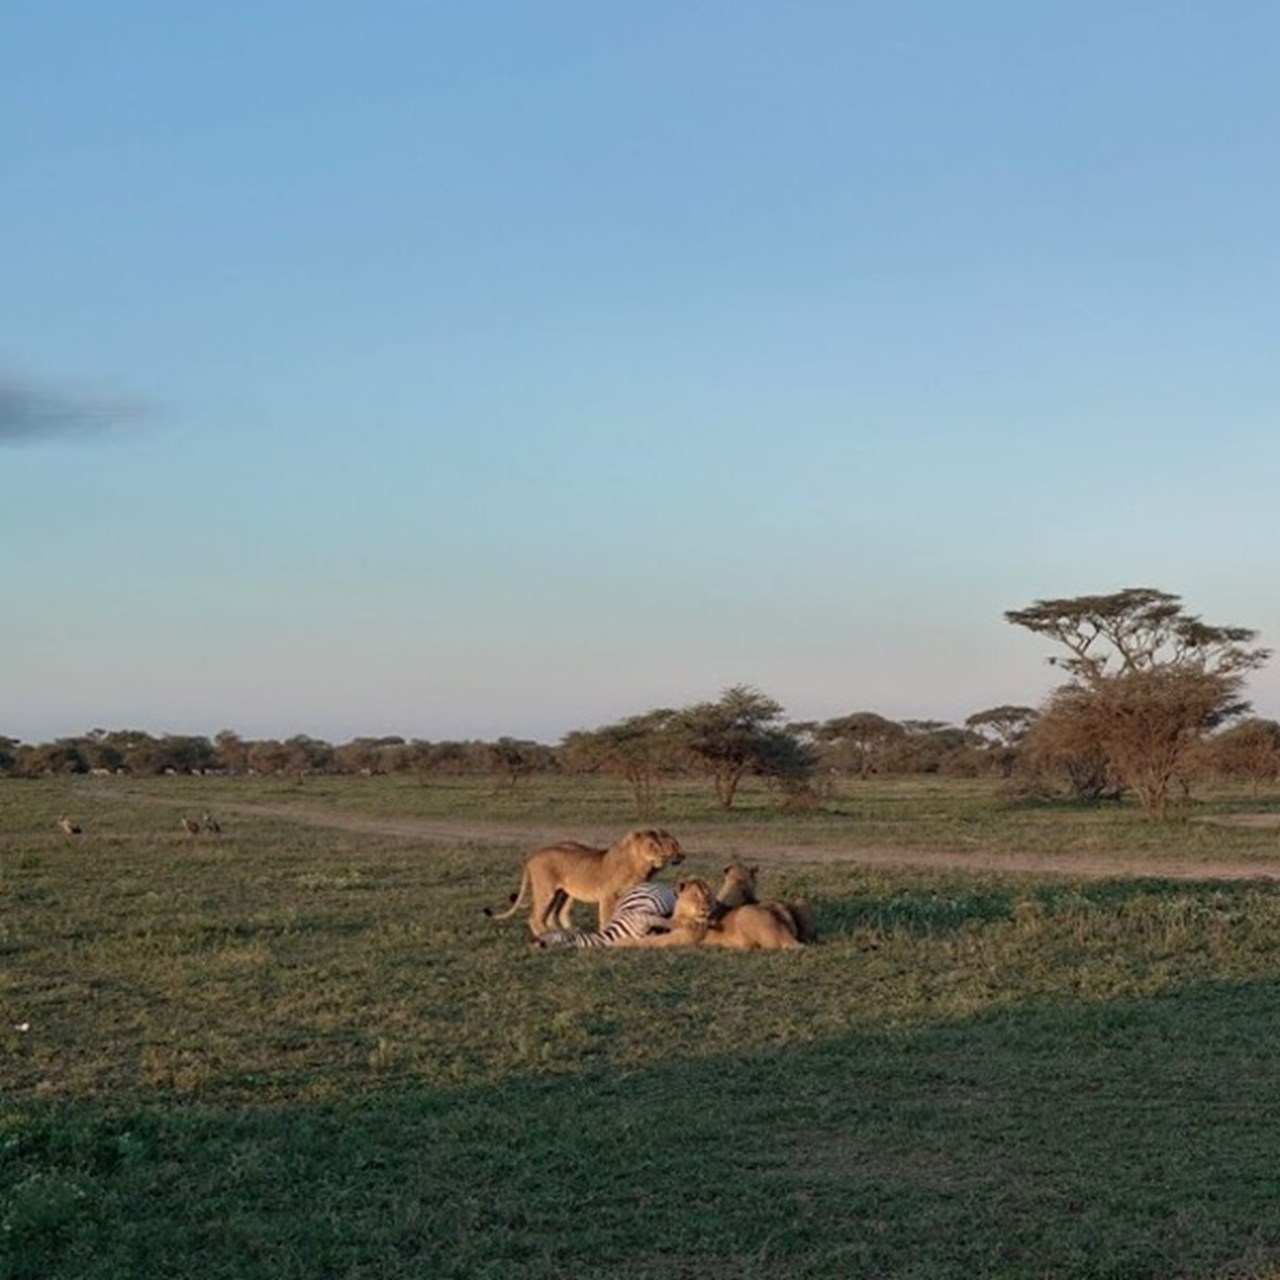 A lion has caught a zebra in Tanzania. 